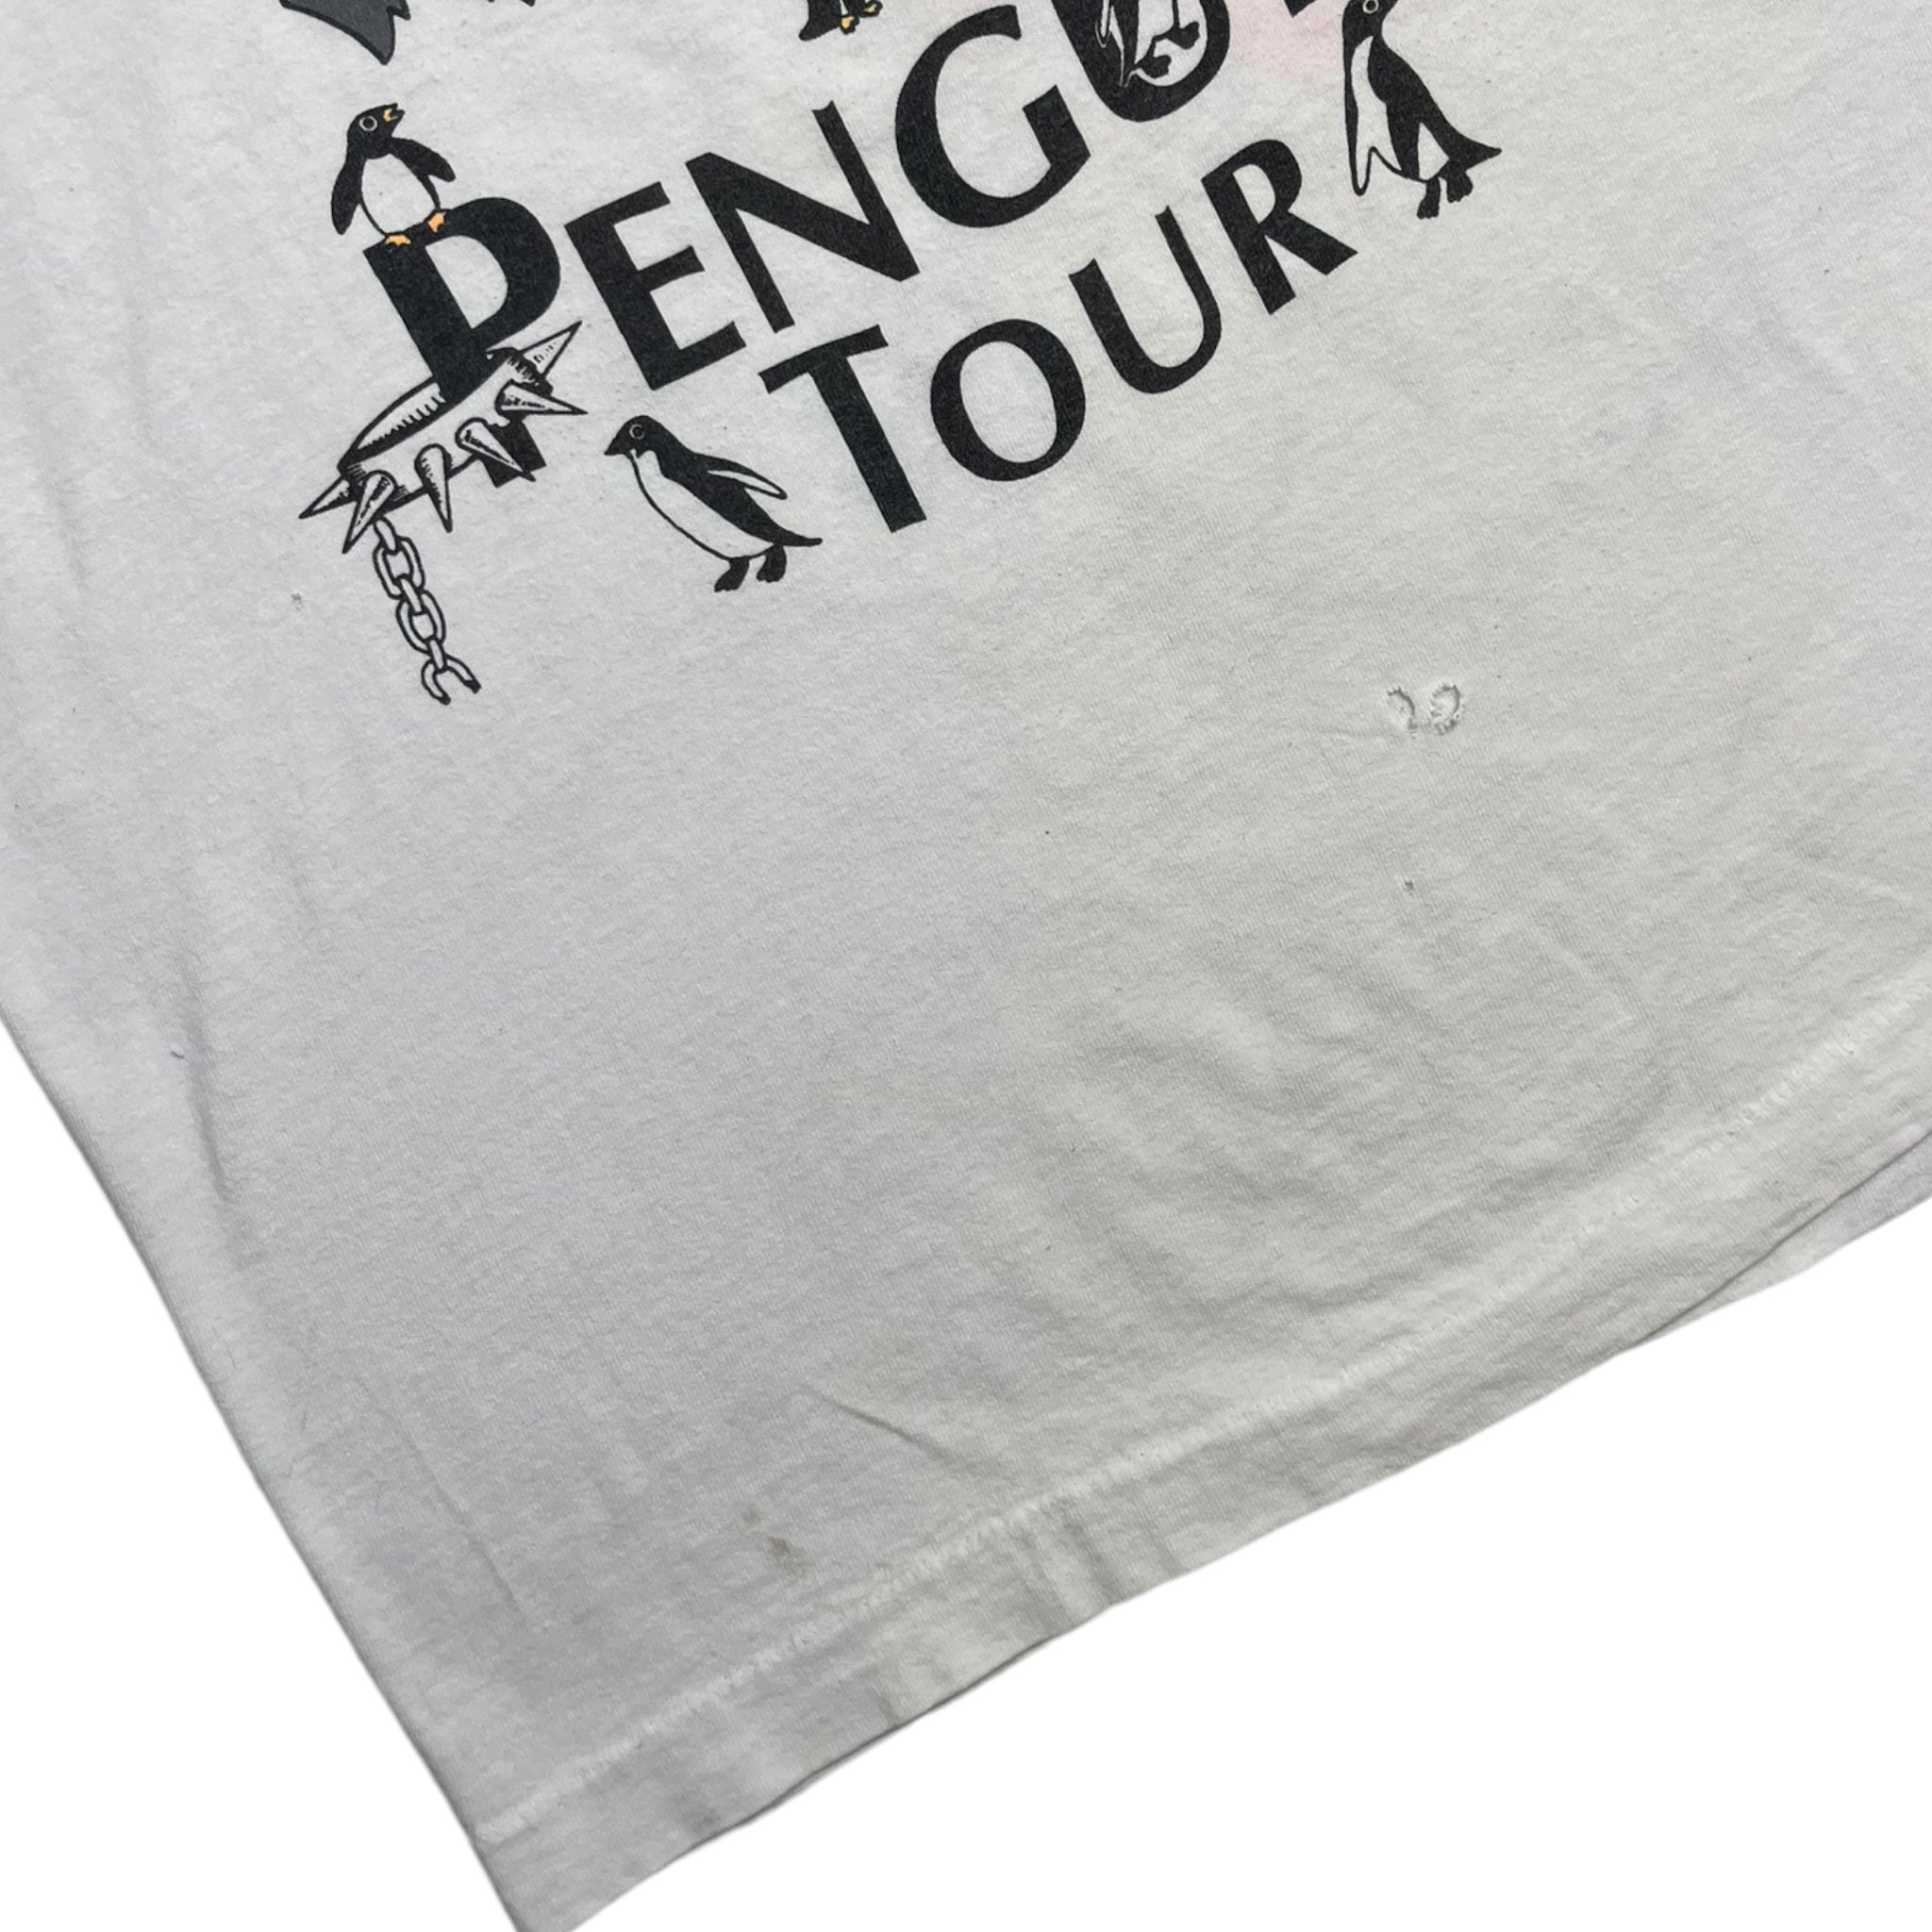 Vintage Gallagher Penguin Tour Shirt - Vicious Malicious Graphic Shirt